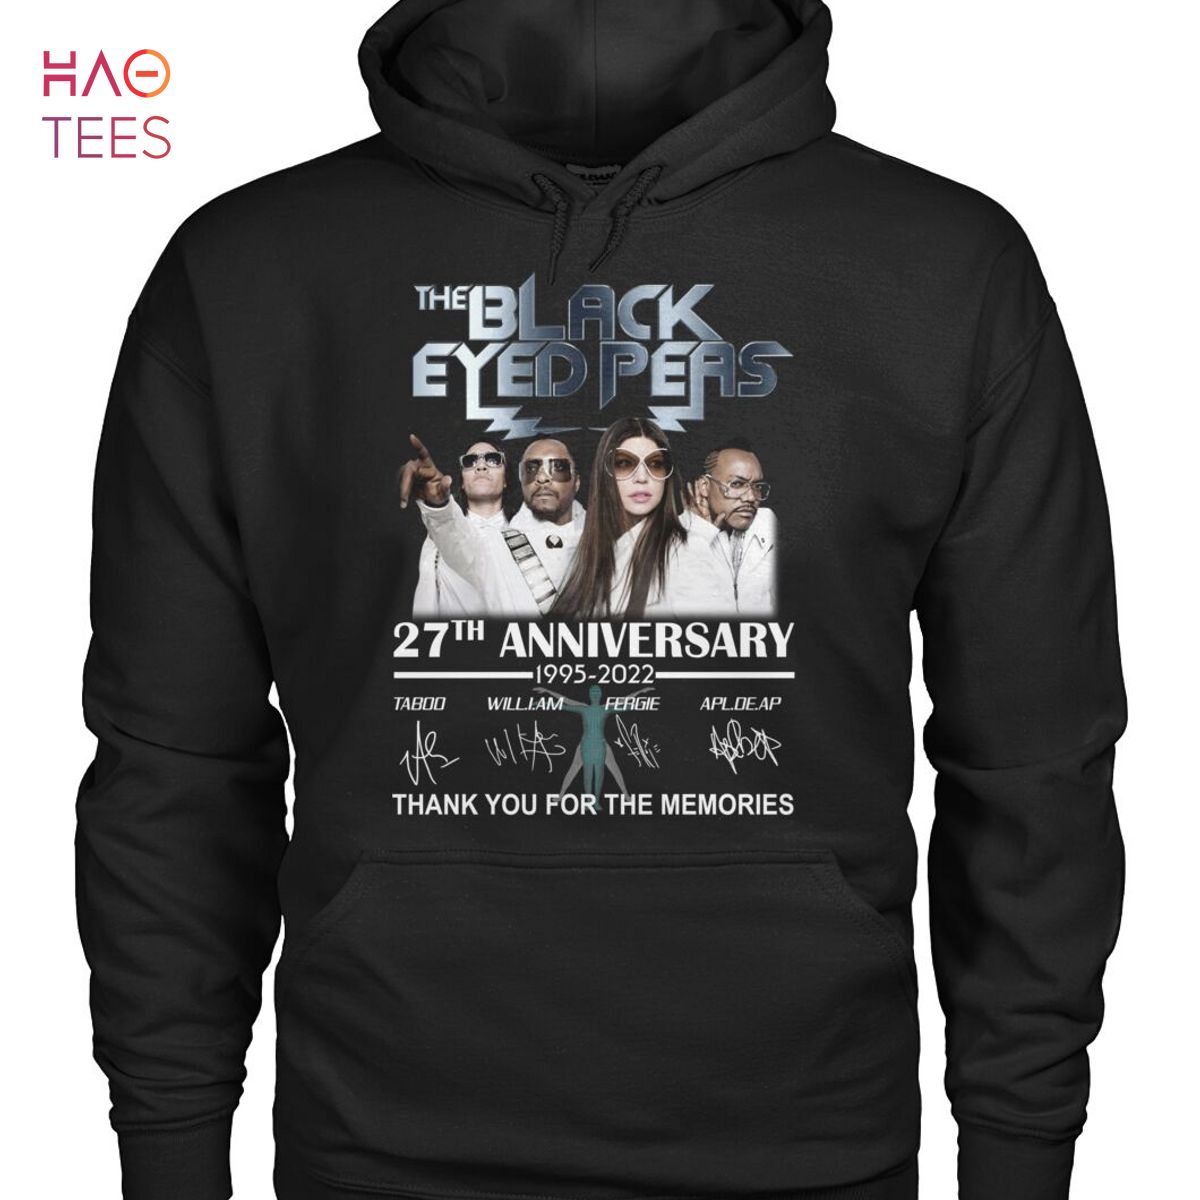 The Black Eyedpeas 27 Anniversary Shirt